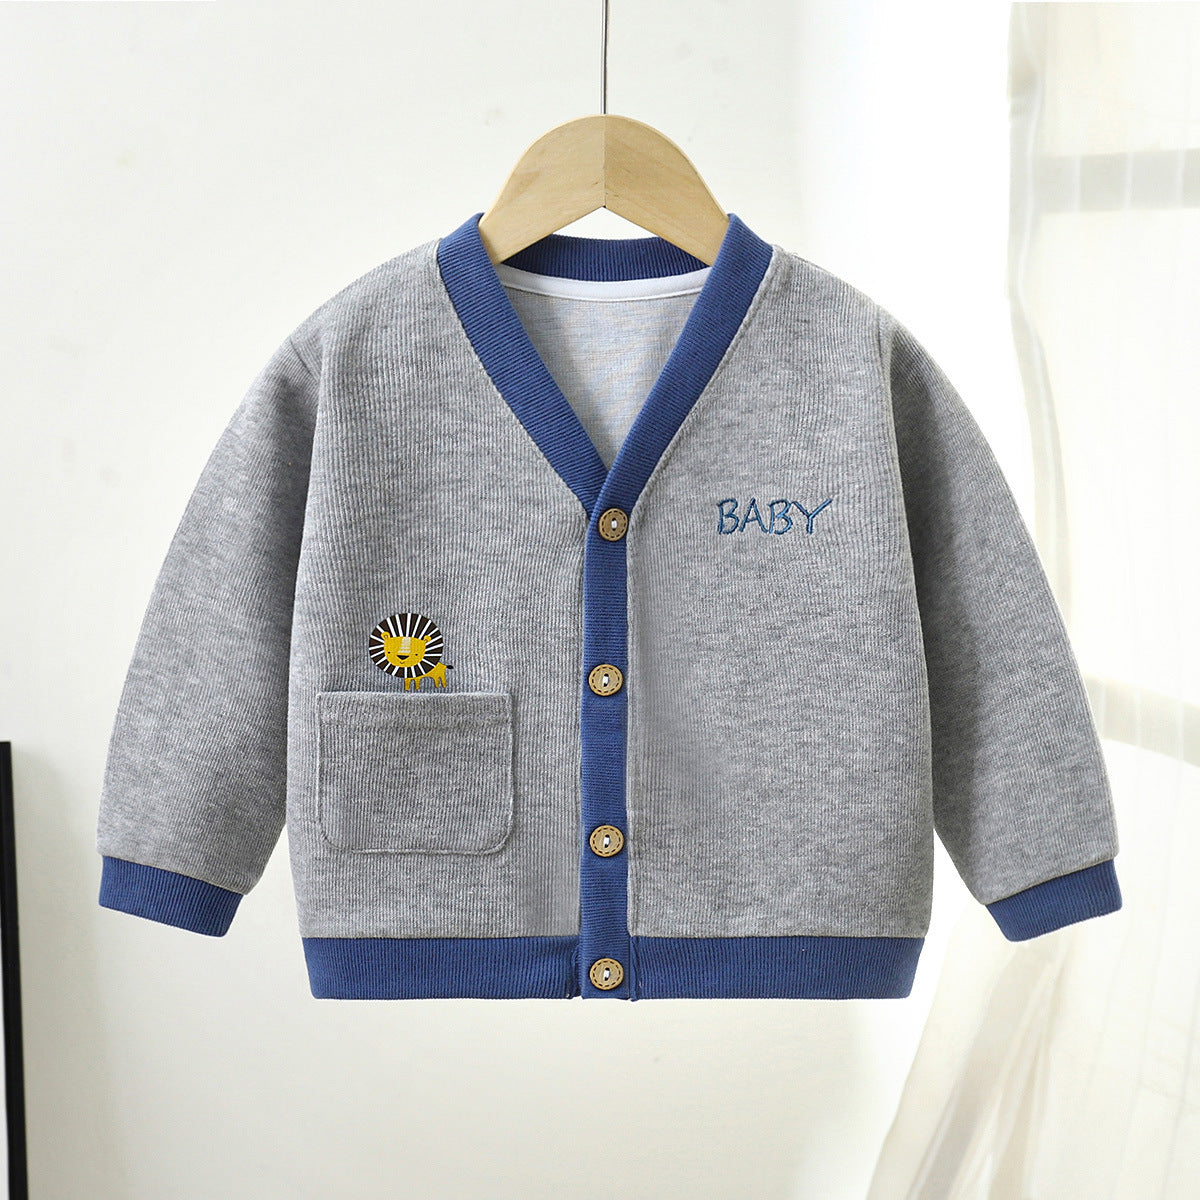 [351282] - Atasan Jaket Cardigan Import Anak Cowok Cewek - Motif Small Embroidery